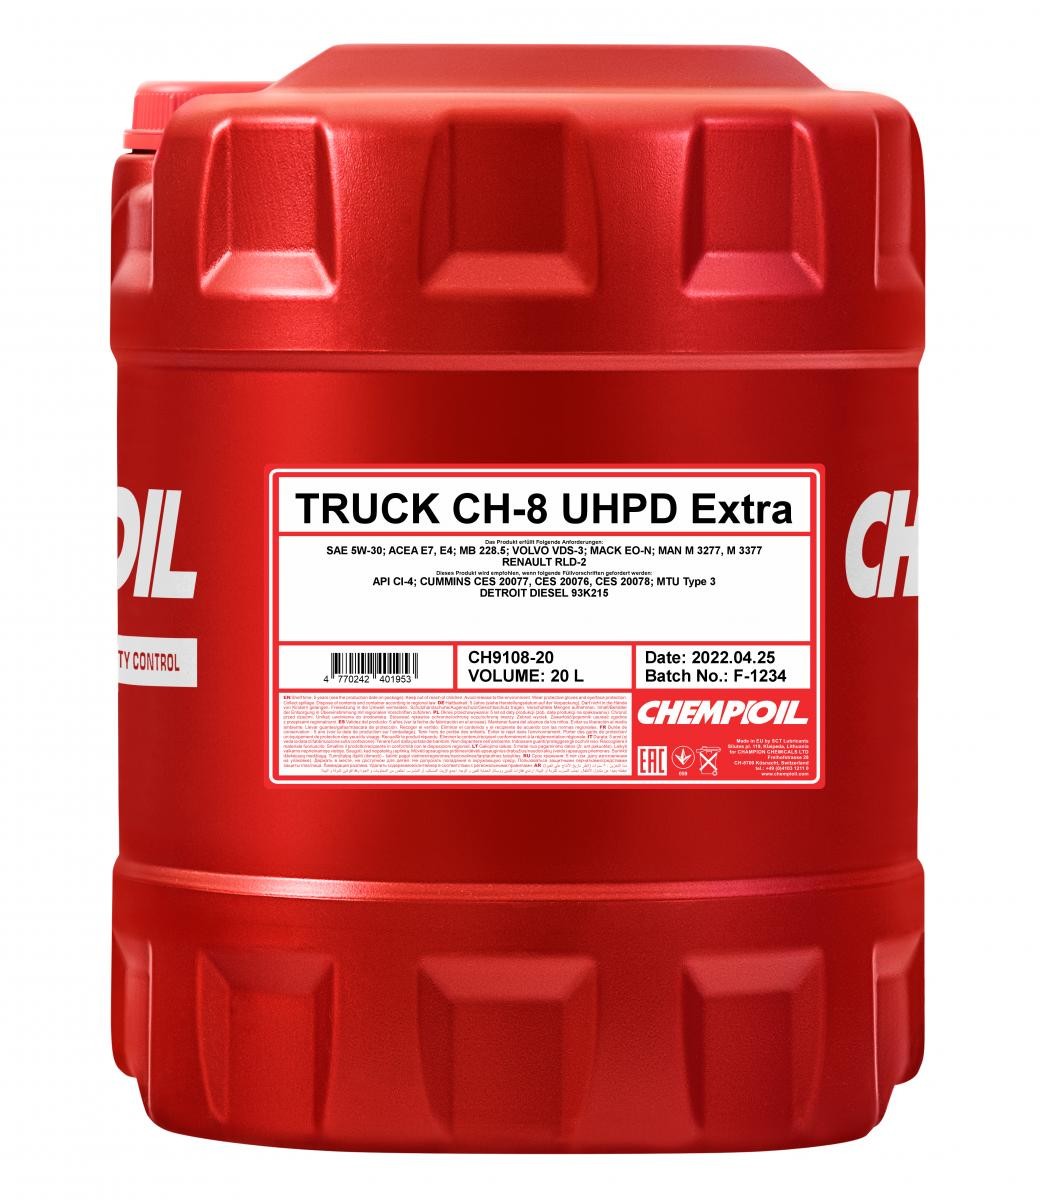 Engine oil ACEA E4 CHEMPIOIL - CH9108-20 Truck, Extra CH-8